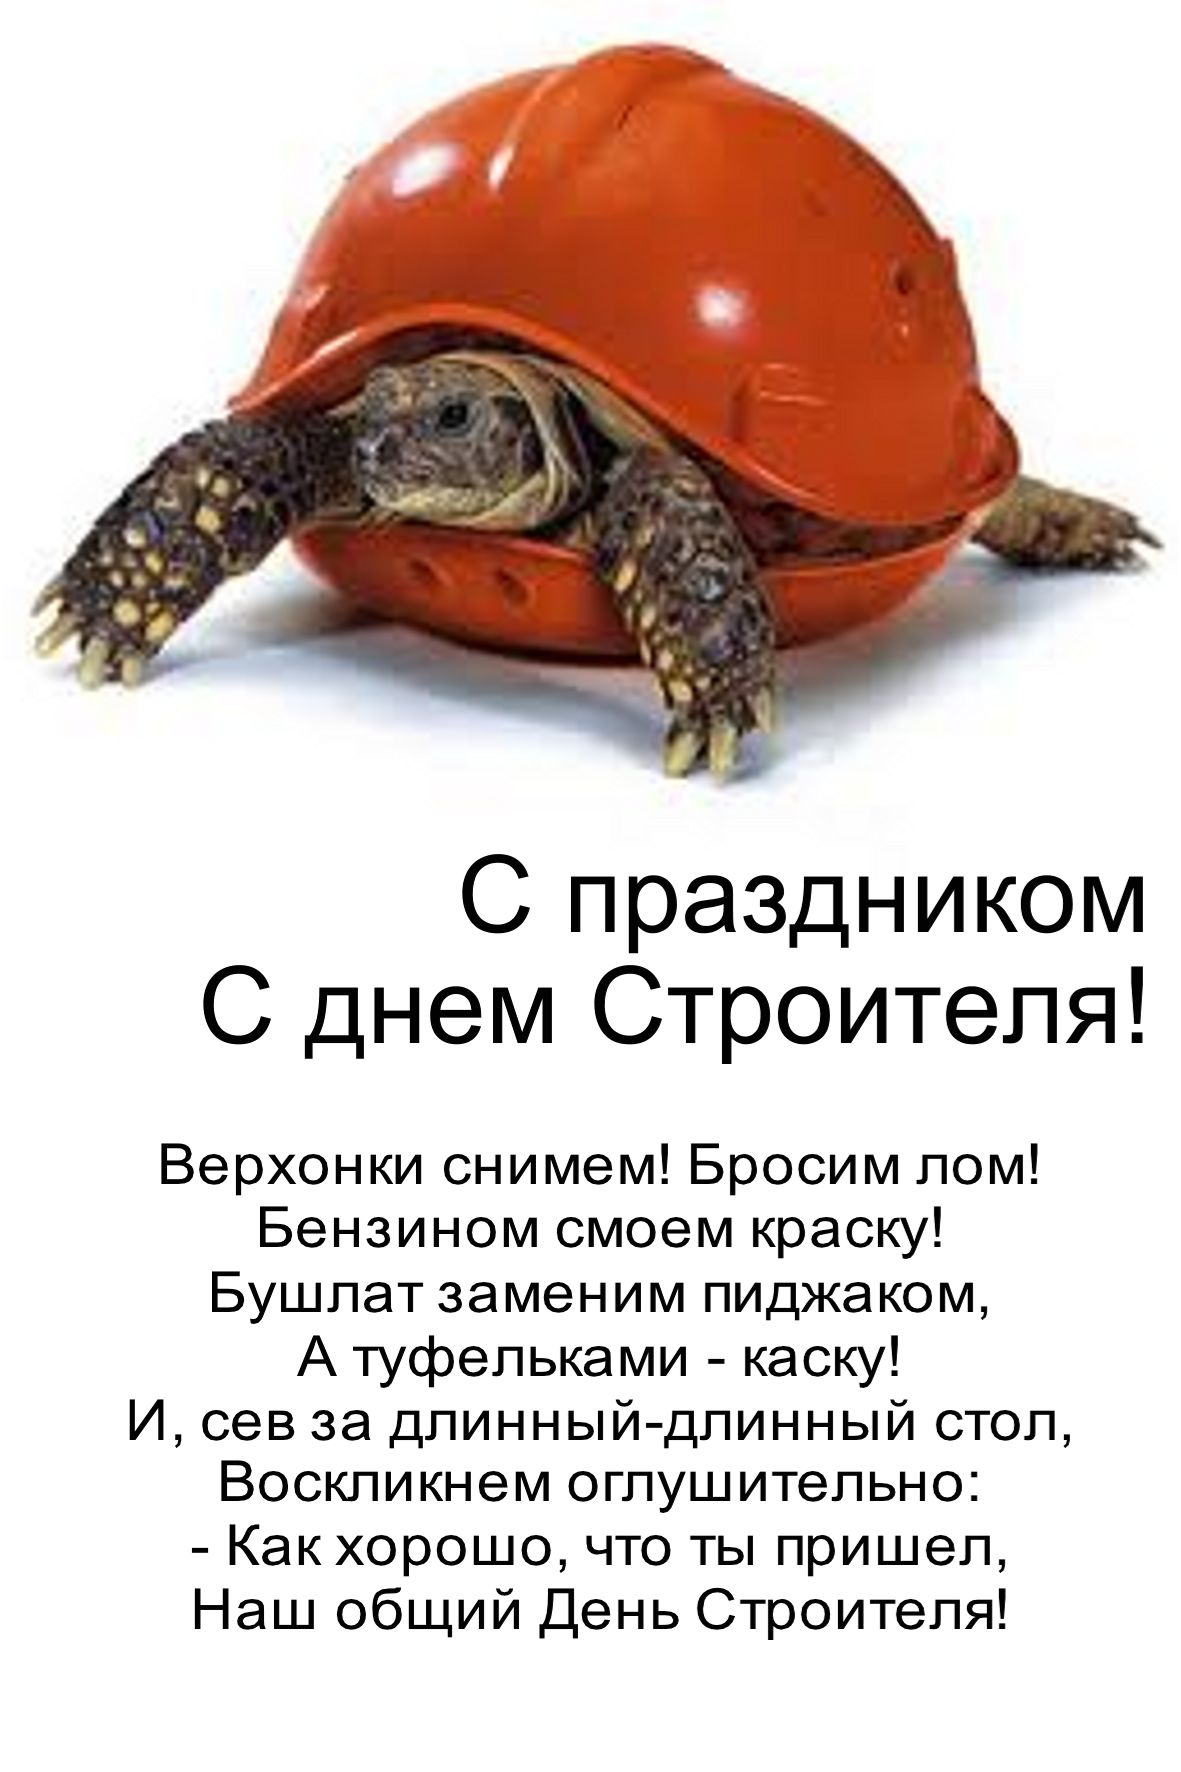 http://www.pra3dnuk.ru/foto/1/stroit_9.jpg